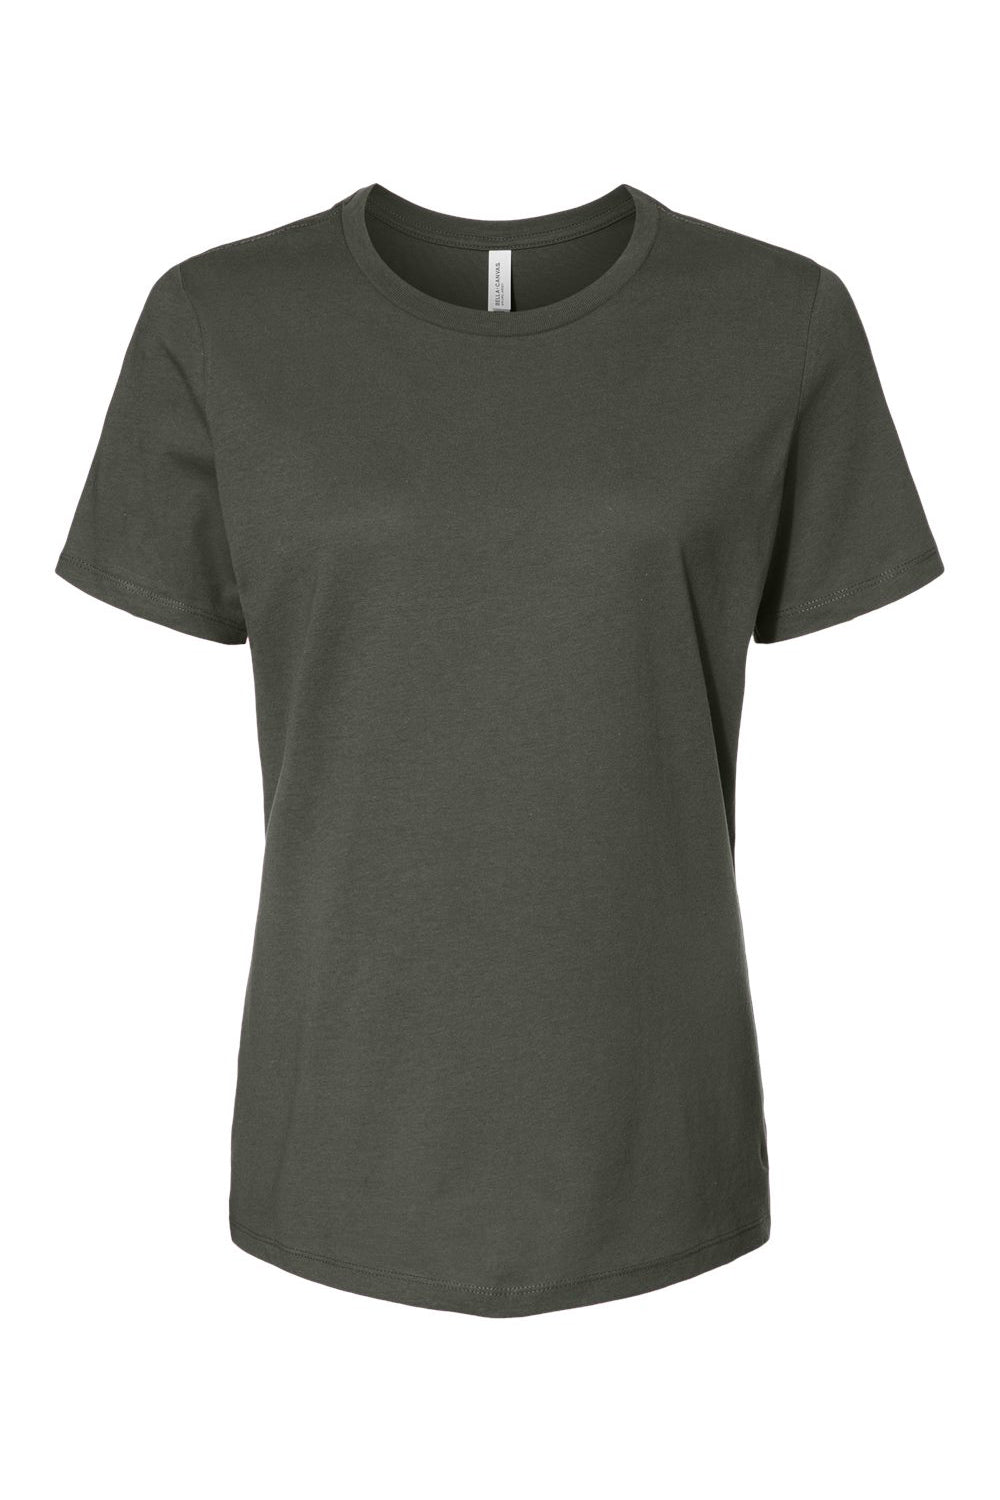 Bella + Canvas BC6400/B6400/6400 Womens Relaxed Jersey Short Sleeve Crewneck T-Shirt Military Green Flat Front